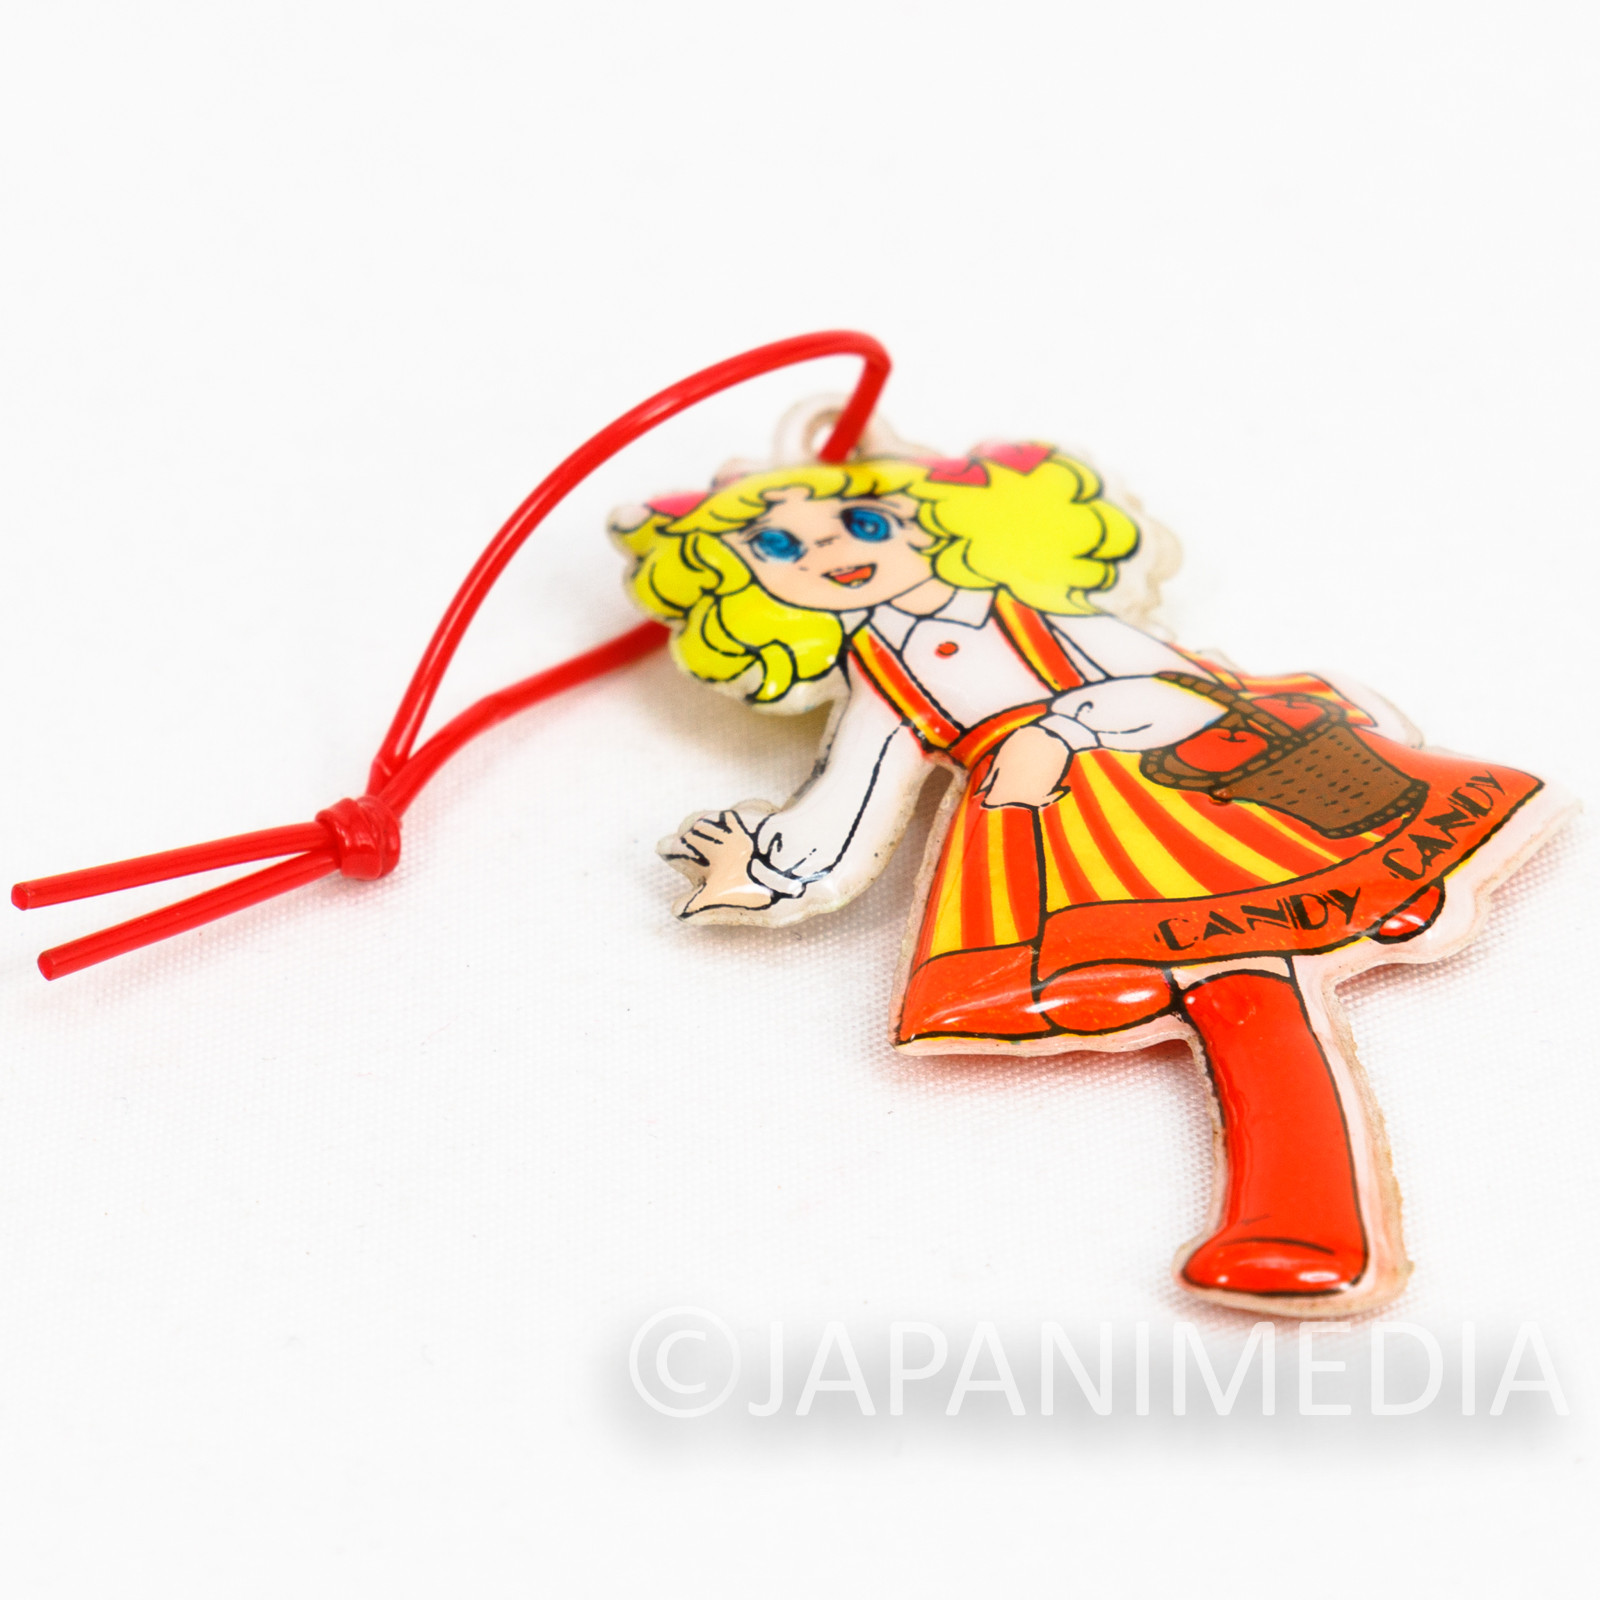 Retro RARE! Candy Candy Vinyl Mascot Strap POPY